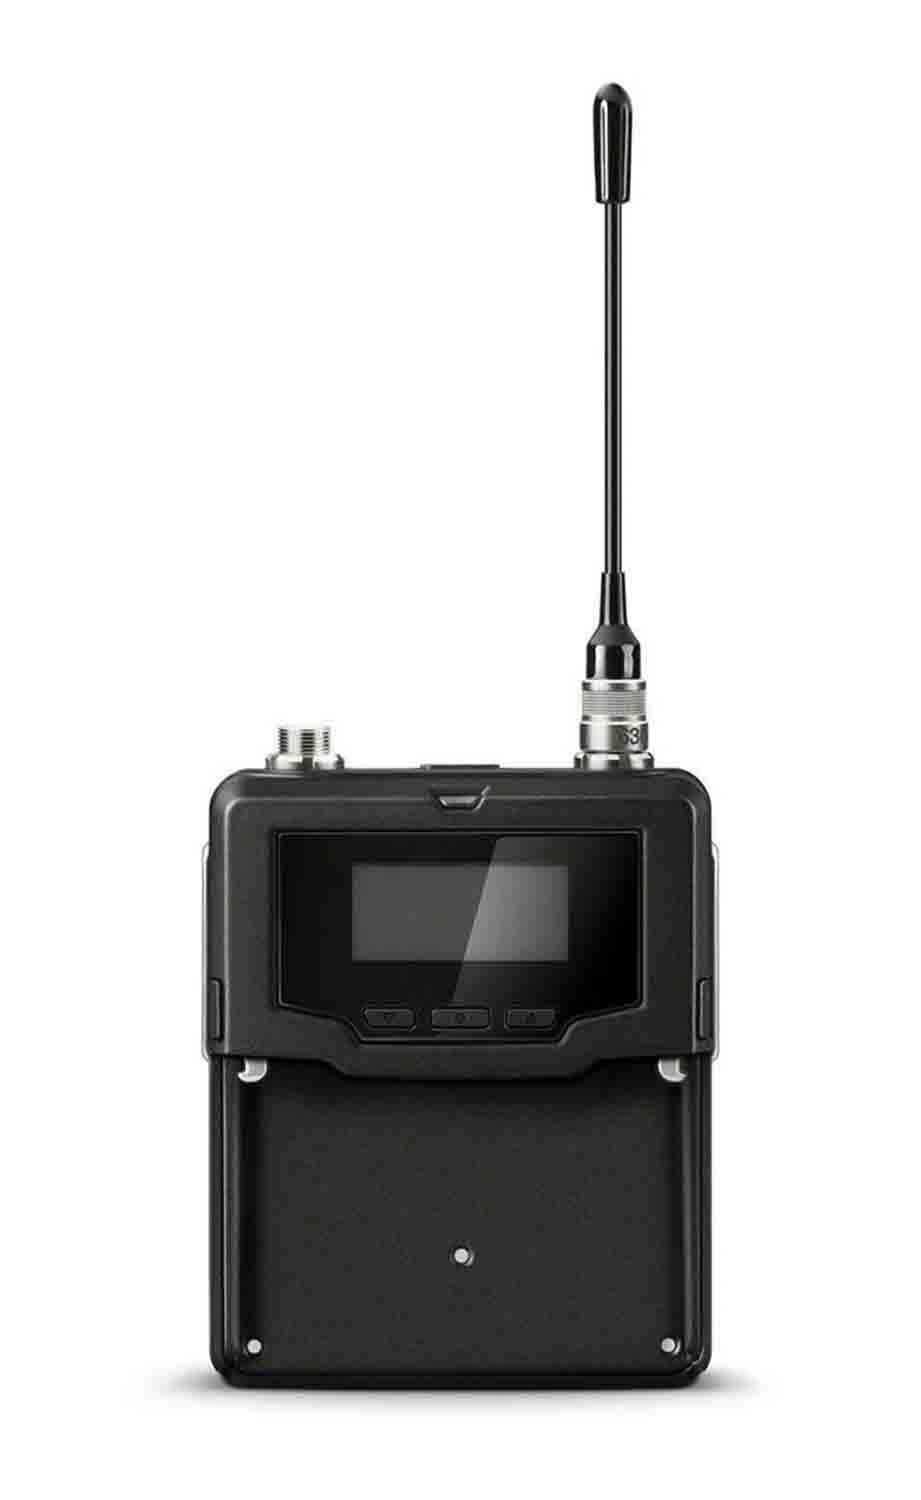 Sennheiser SK 6000 BK A1-A4 Digital Wireless Bodypack Transmitter - 470 to 558 MHz - Hollywood DJ